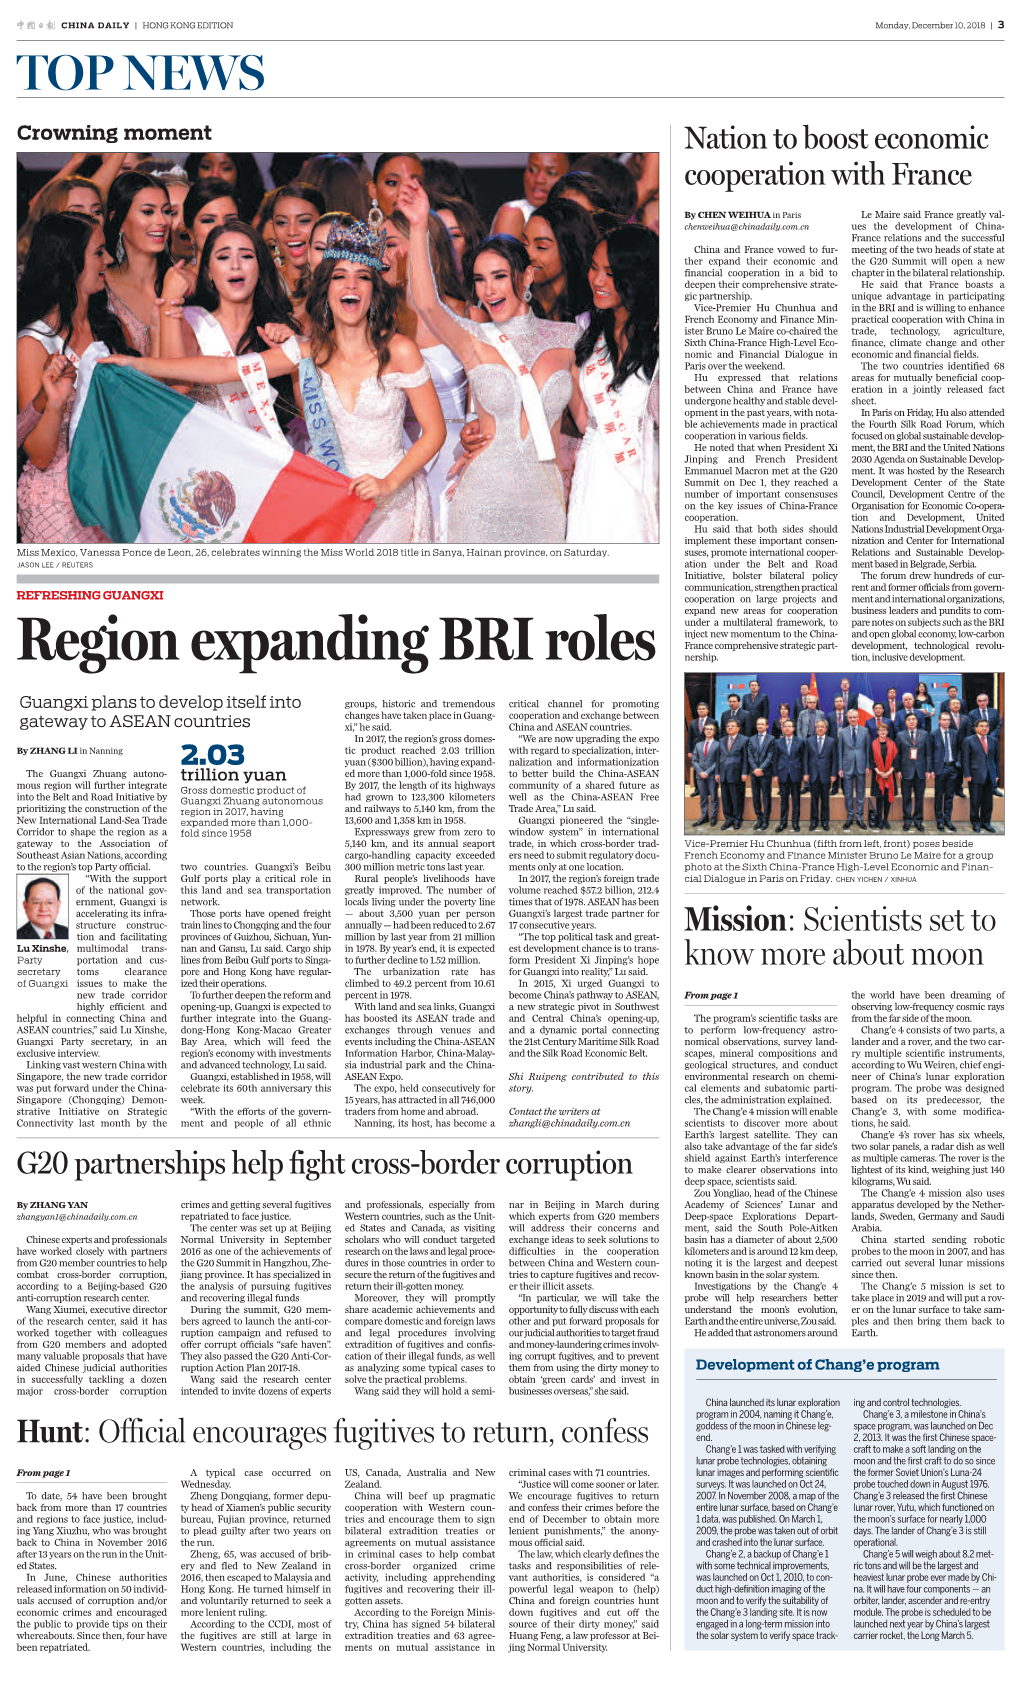 Region Expanding BRI Roles Nership